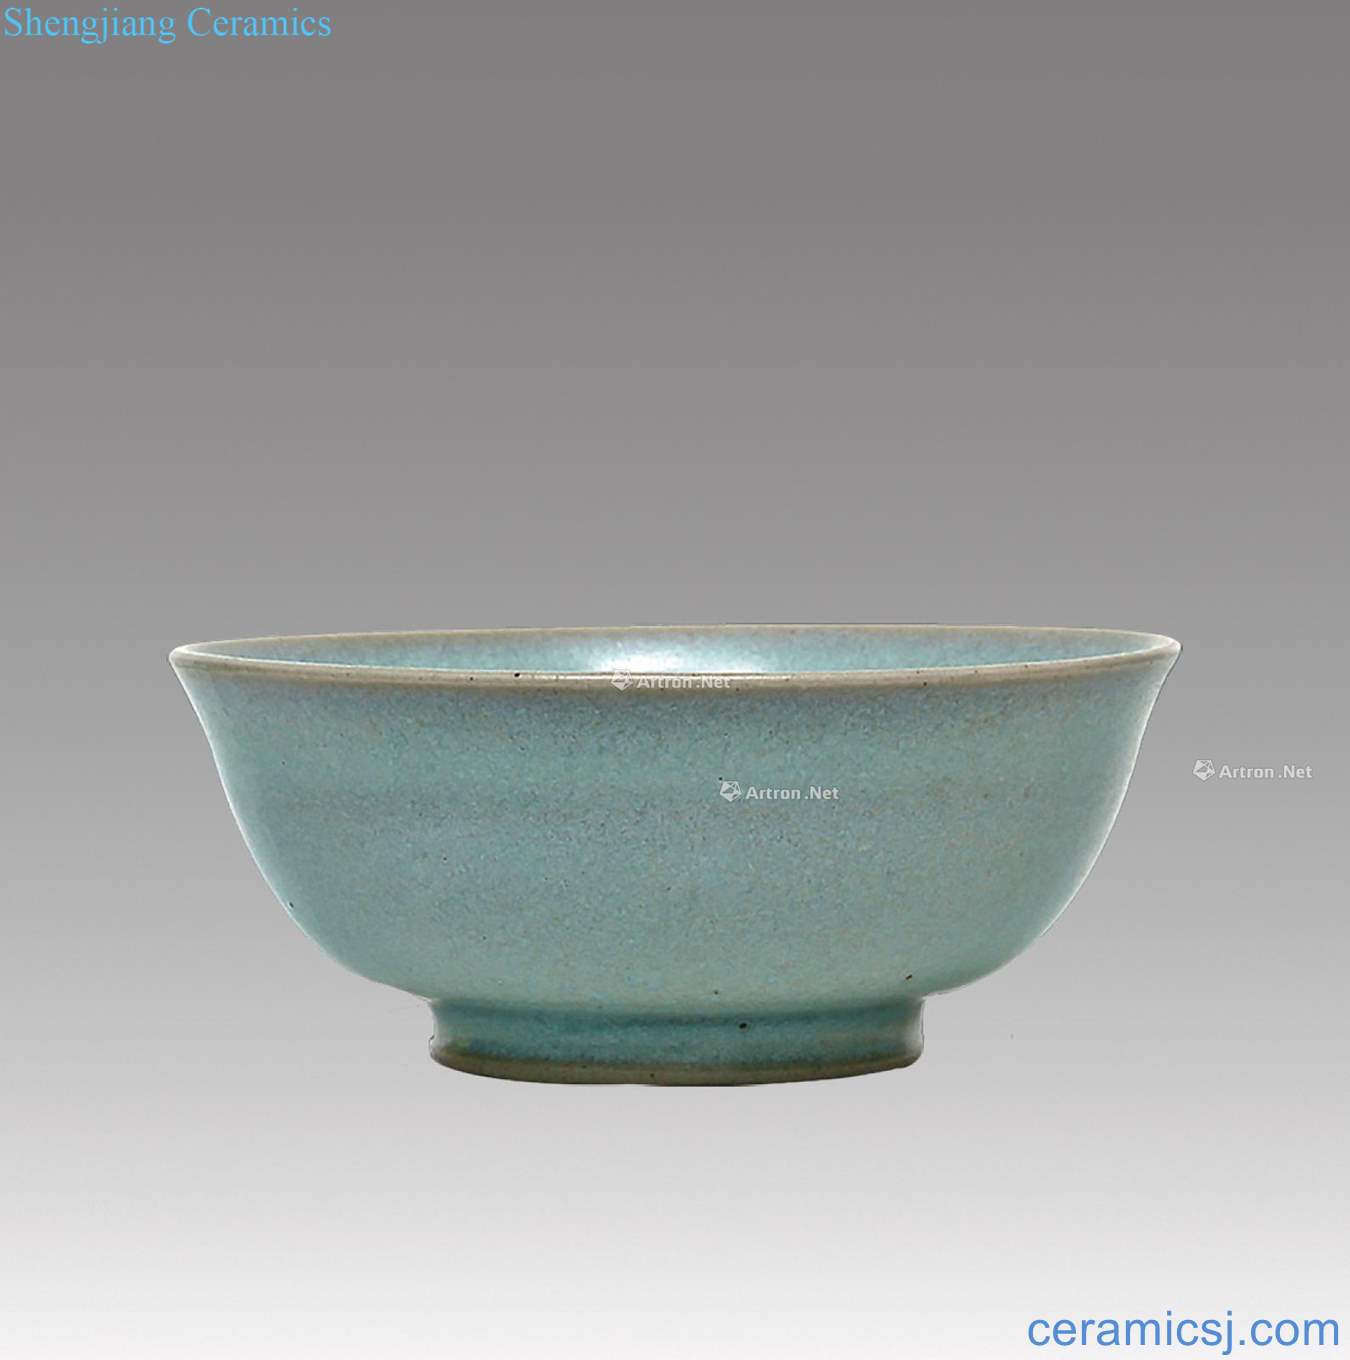 Your kiln azure glaze bowls